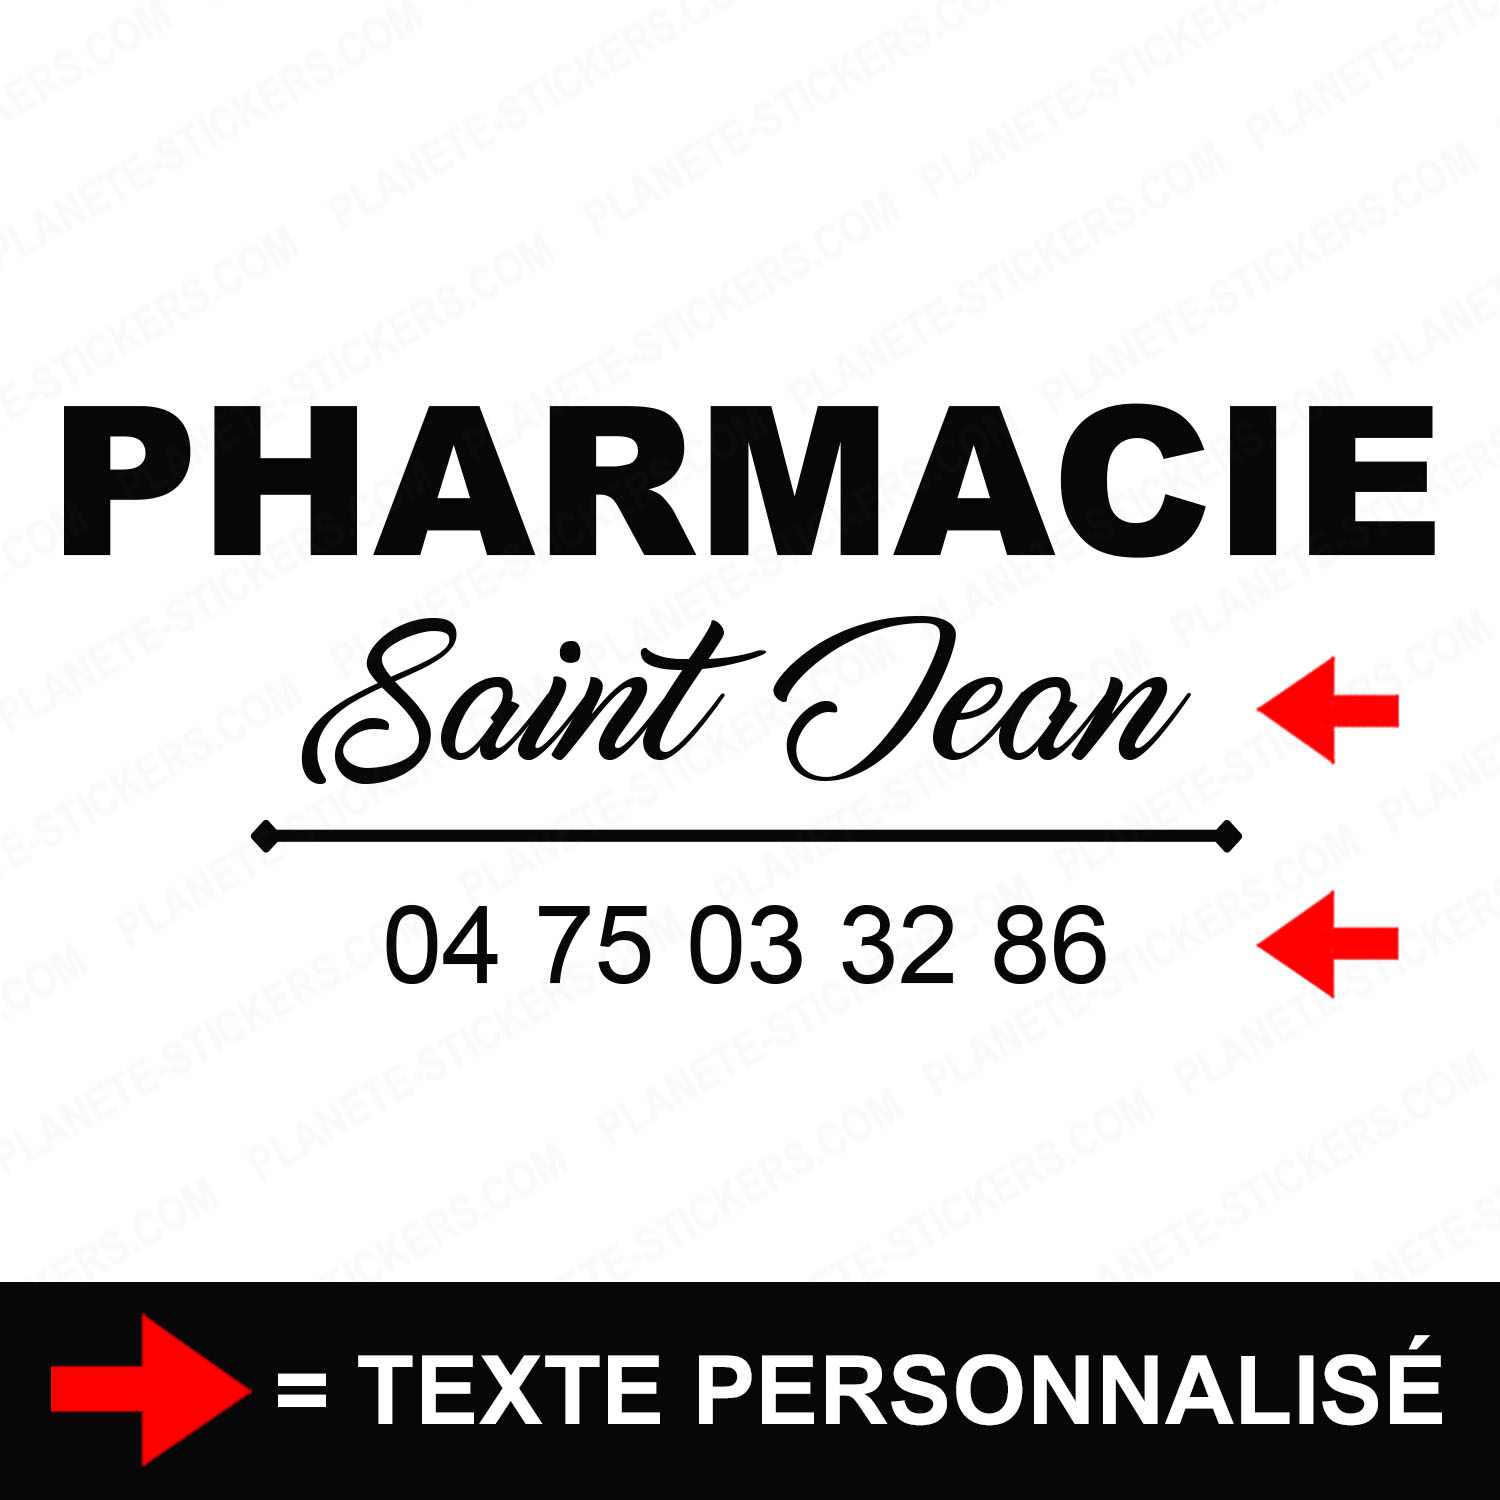 ref8pharmacievitrine-stickers-pharmacie-vitrine-sticker-personnalisé-pharmacien-autocollant-médical-pro-vitre-professionnel-logo-écriture-2